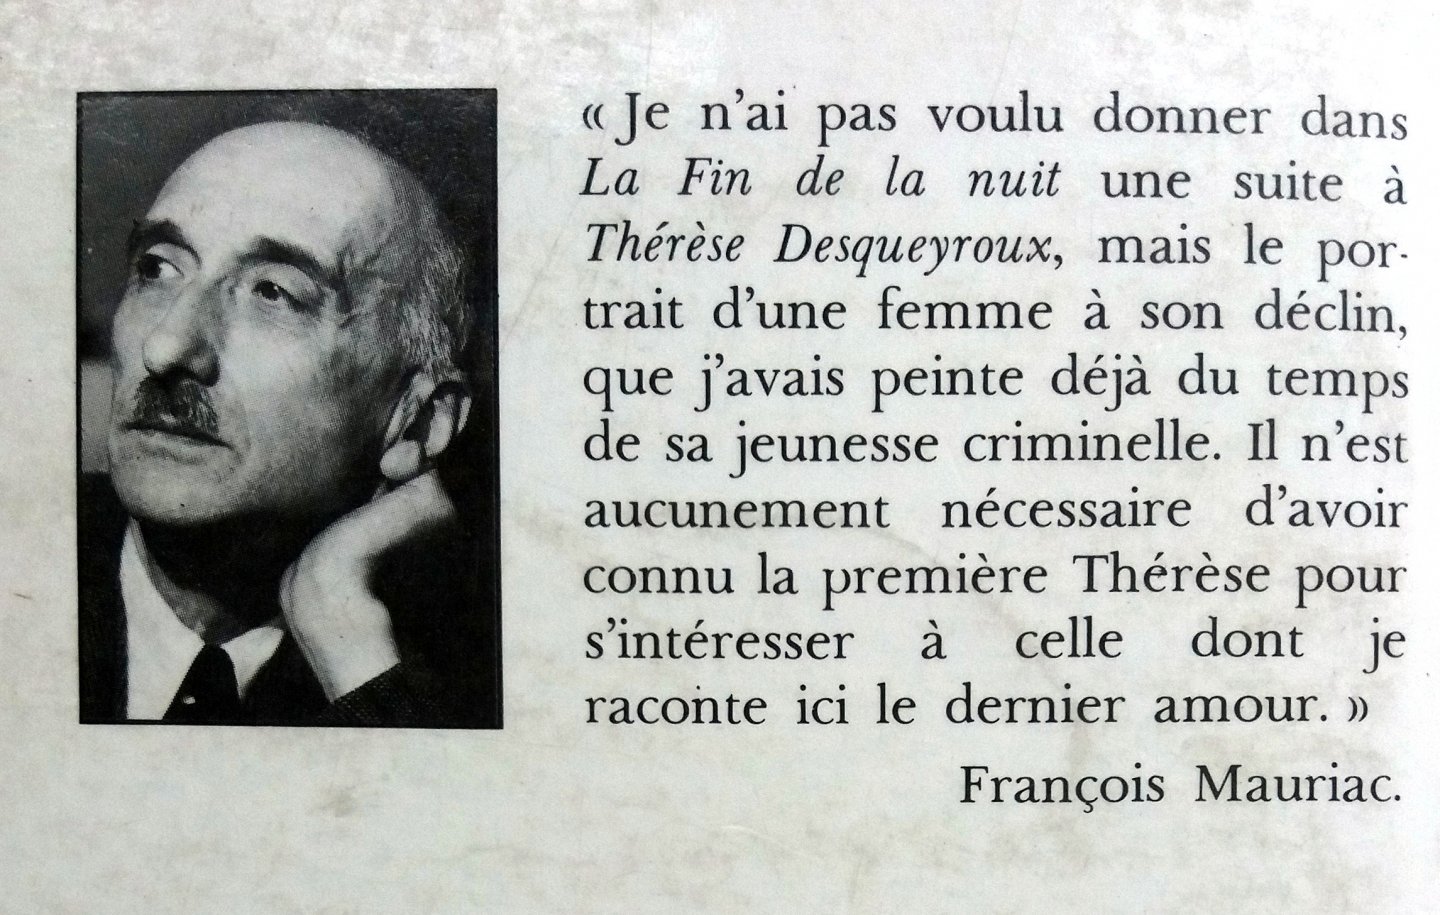 Mauriac, François - La fin de la nuit (Ex.1) (FRANSTALIG)